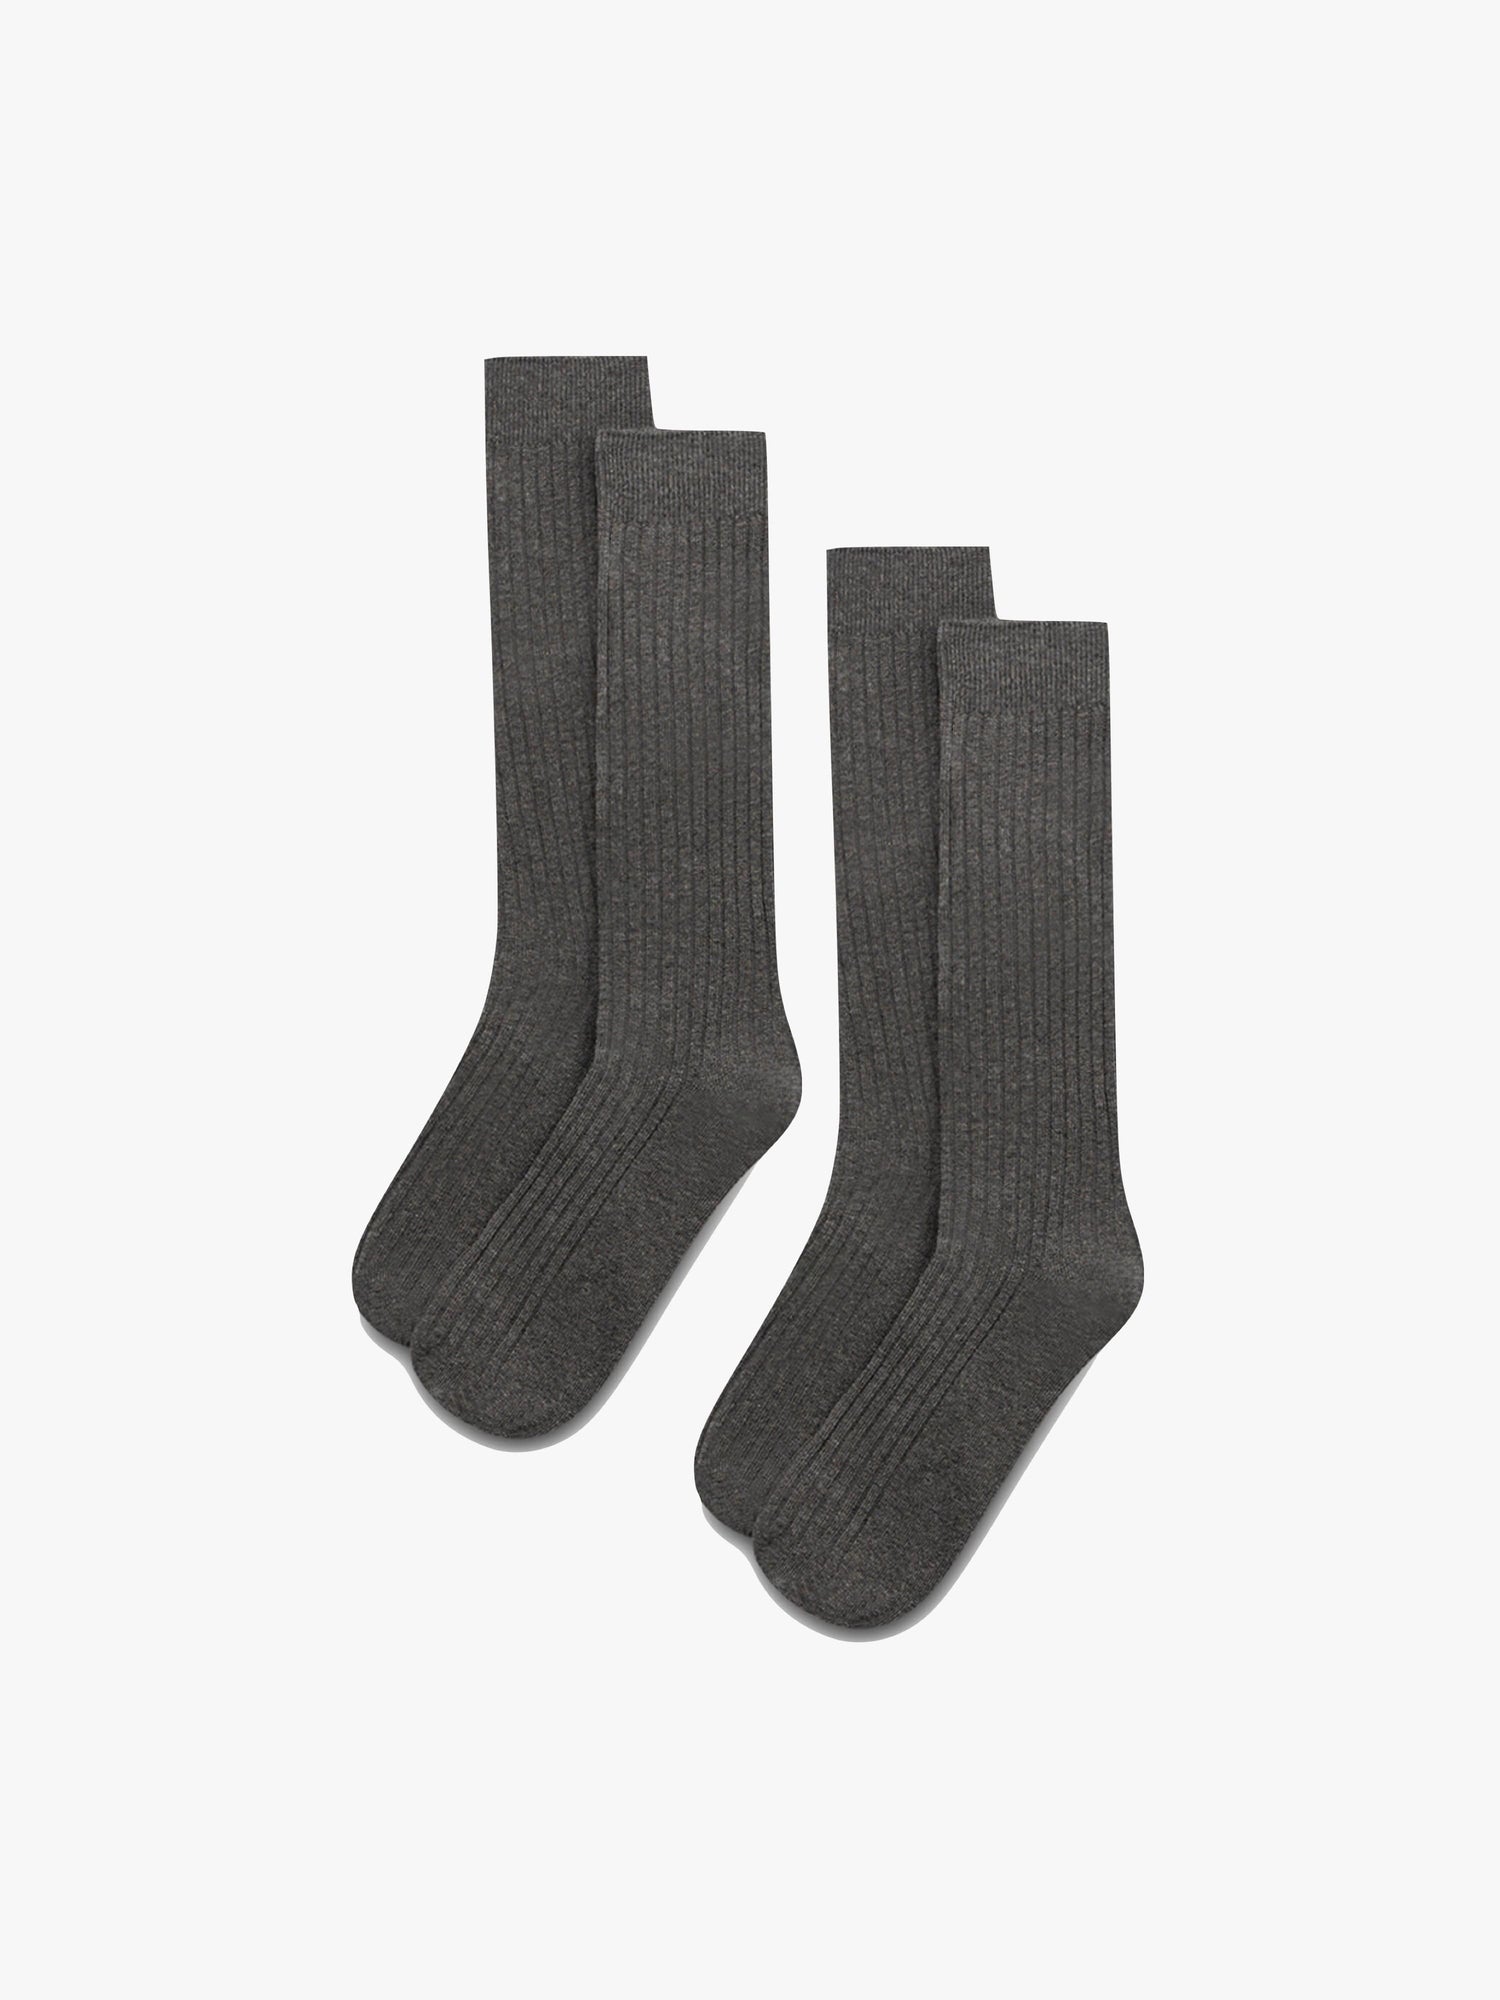 Grey Ribbed Socks (2 pack) - Grand Le Mar